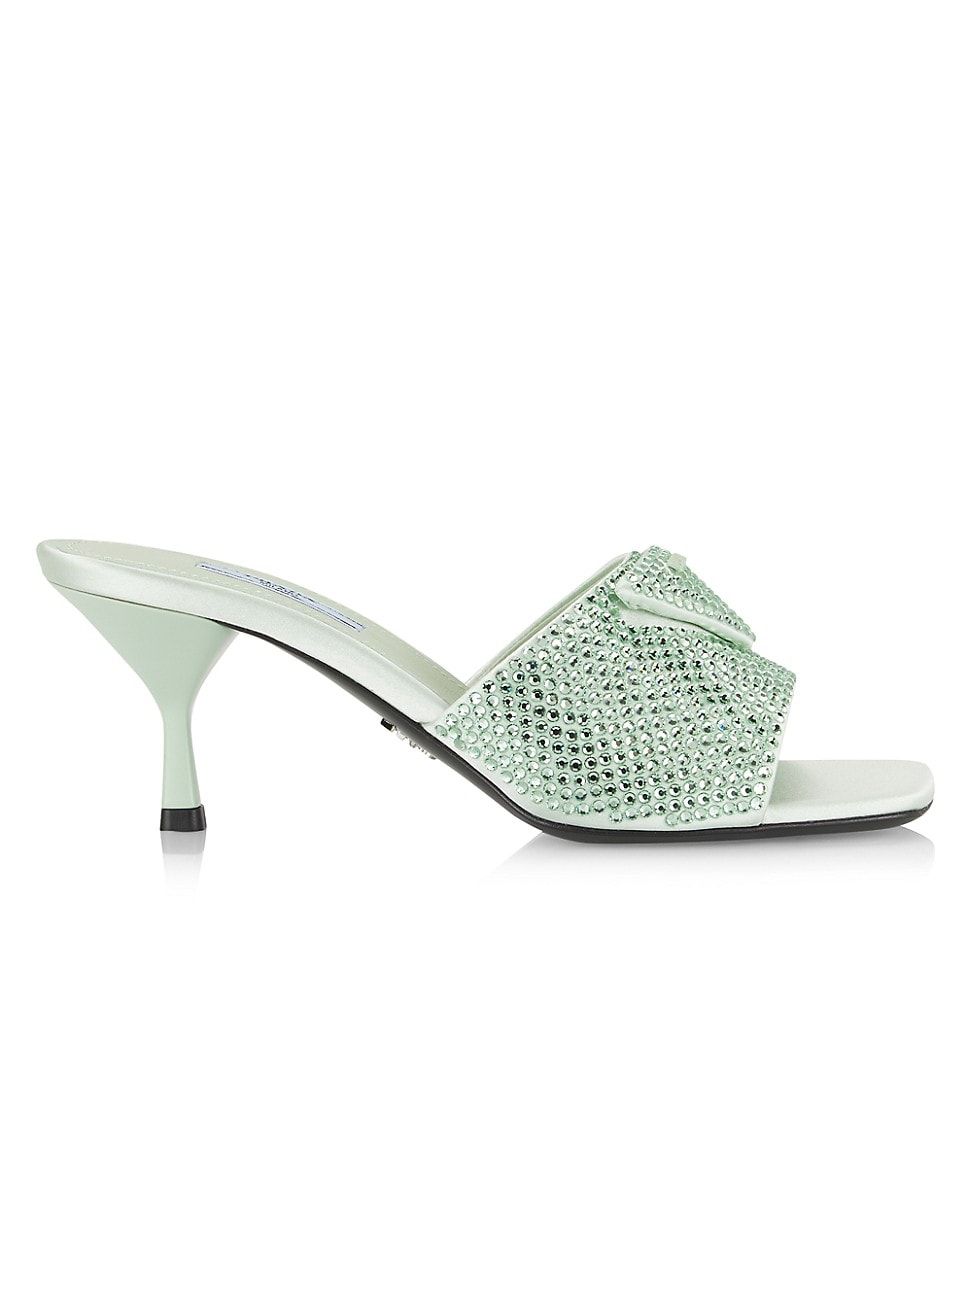 Women's Crystal-Embellished Mules - Aqua - Size 9.5 | Saks Fifth Avenue